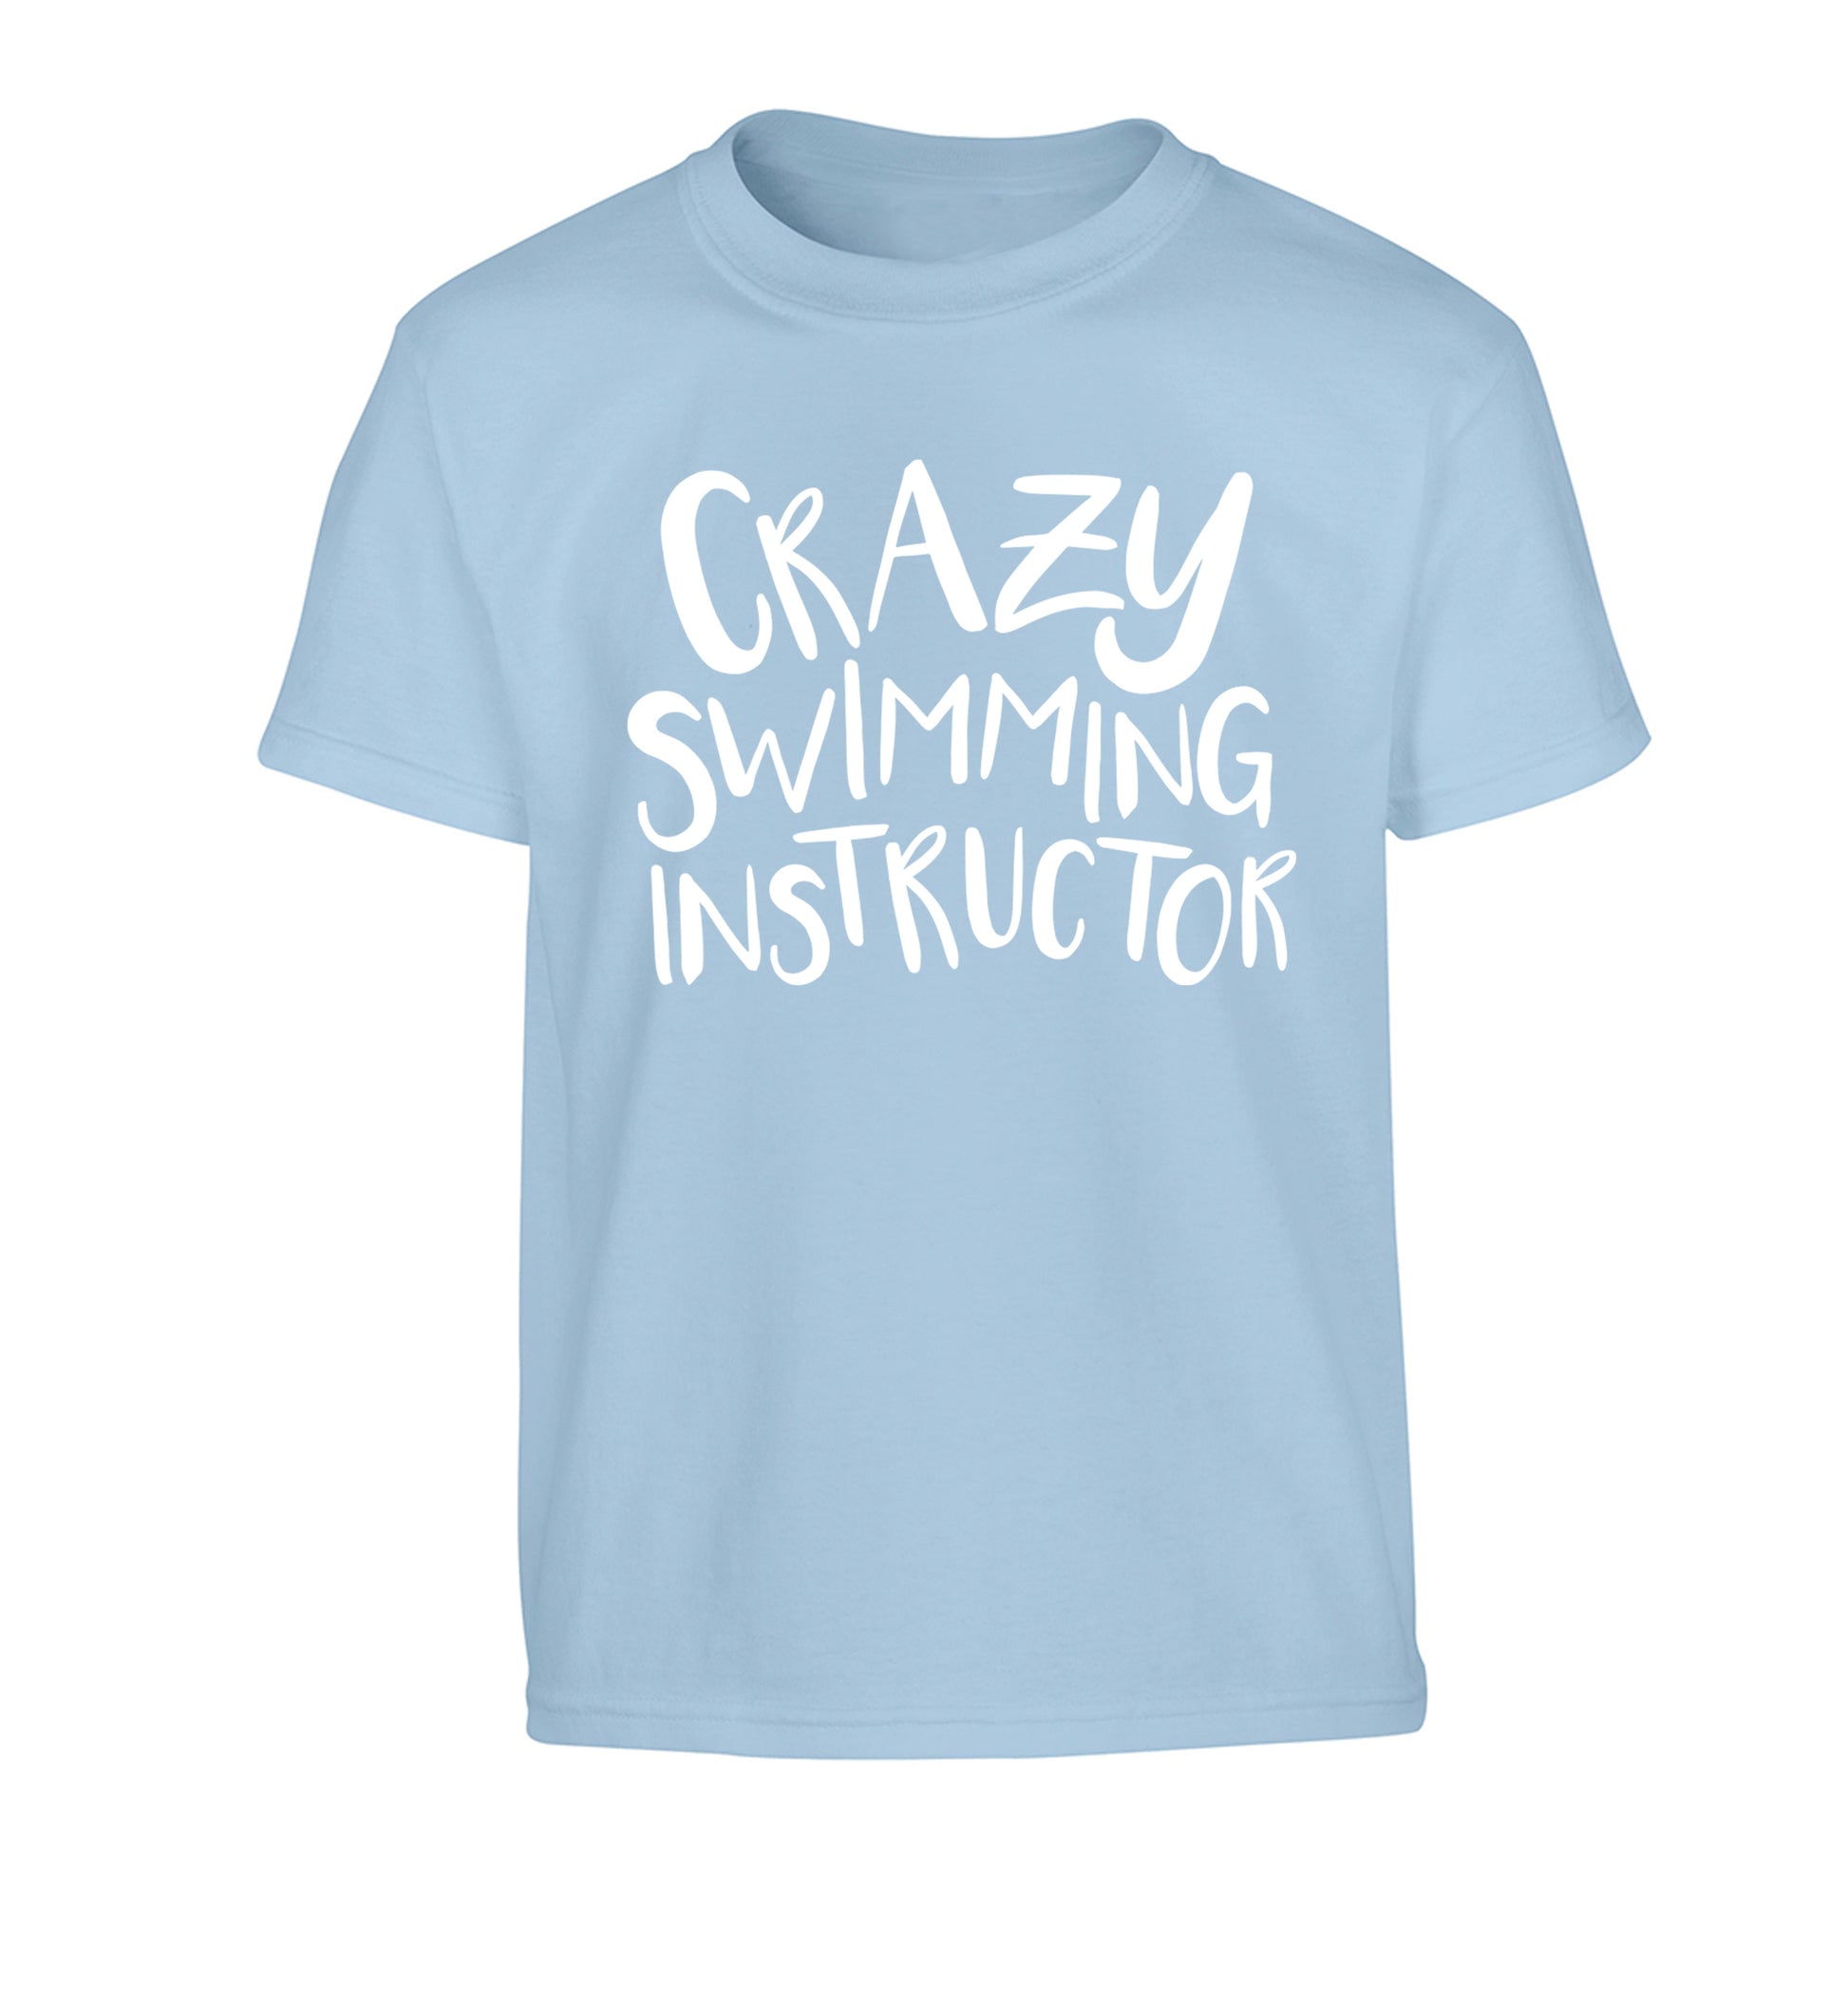 Crazy swimming instructor Children's light blue Tshirt 12-13 Years